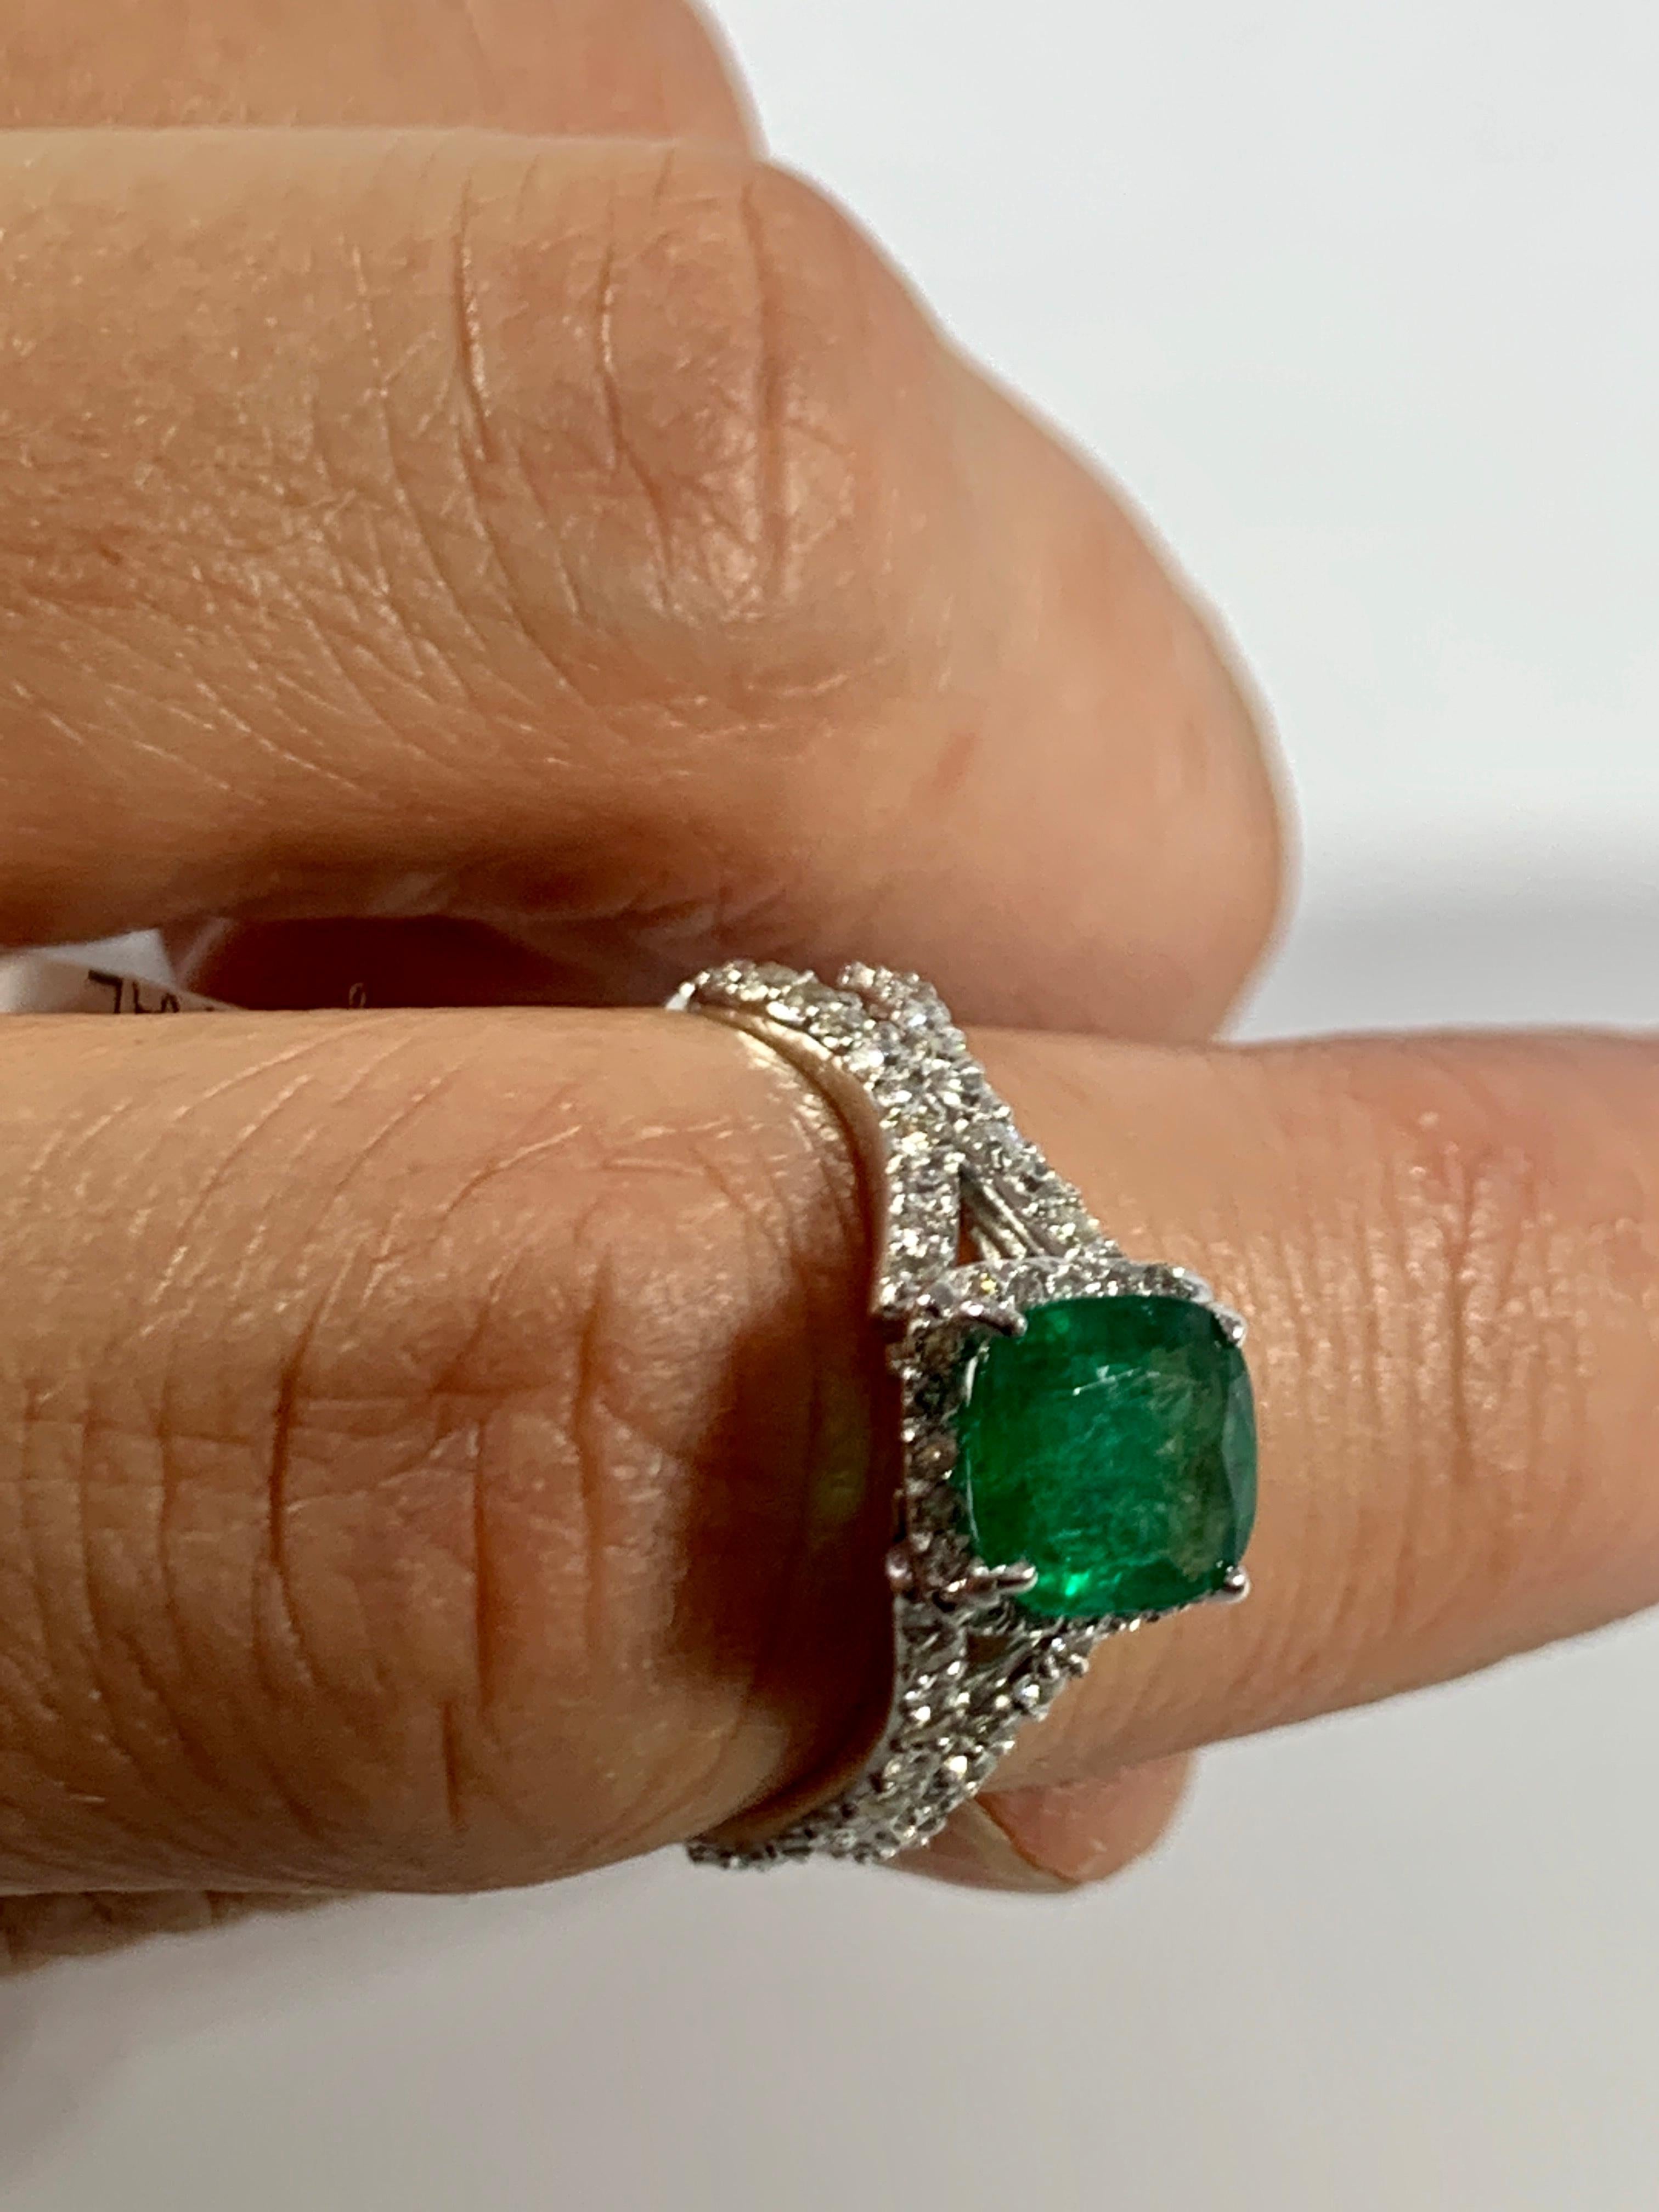 Women's 1.3 Carat Cushion Cut Emerald and 1.2 Carat Diamond Ring 14 Karat White Gold For Sale